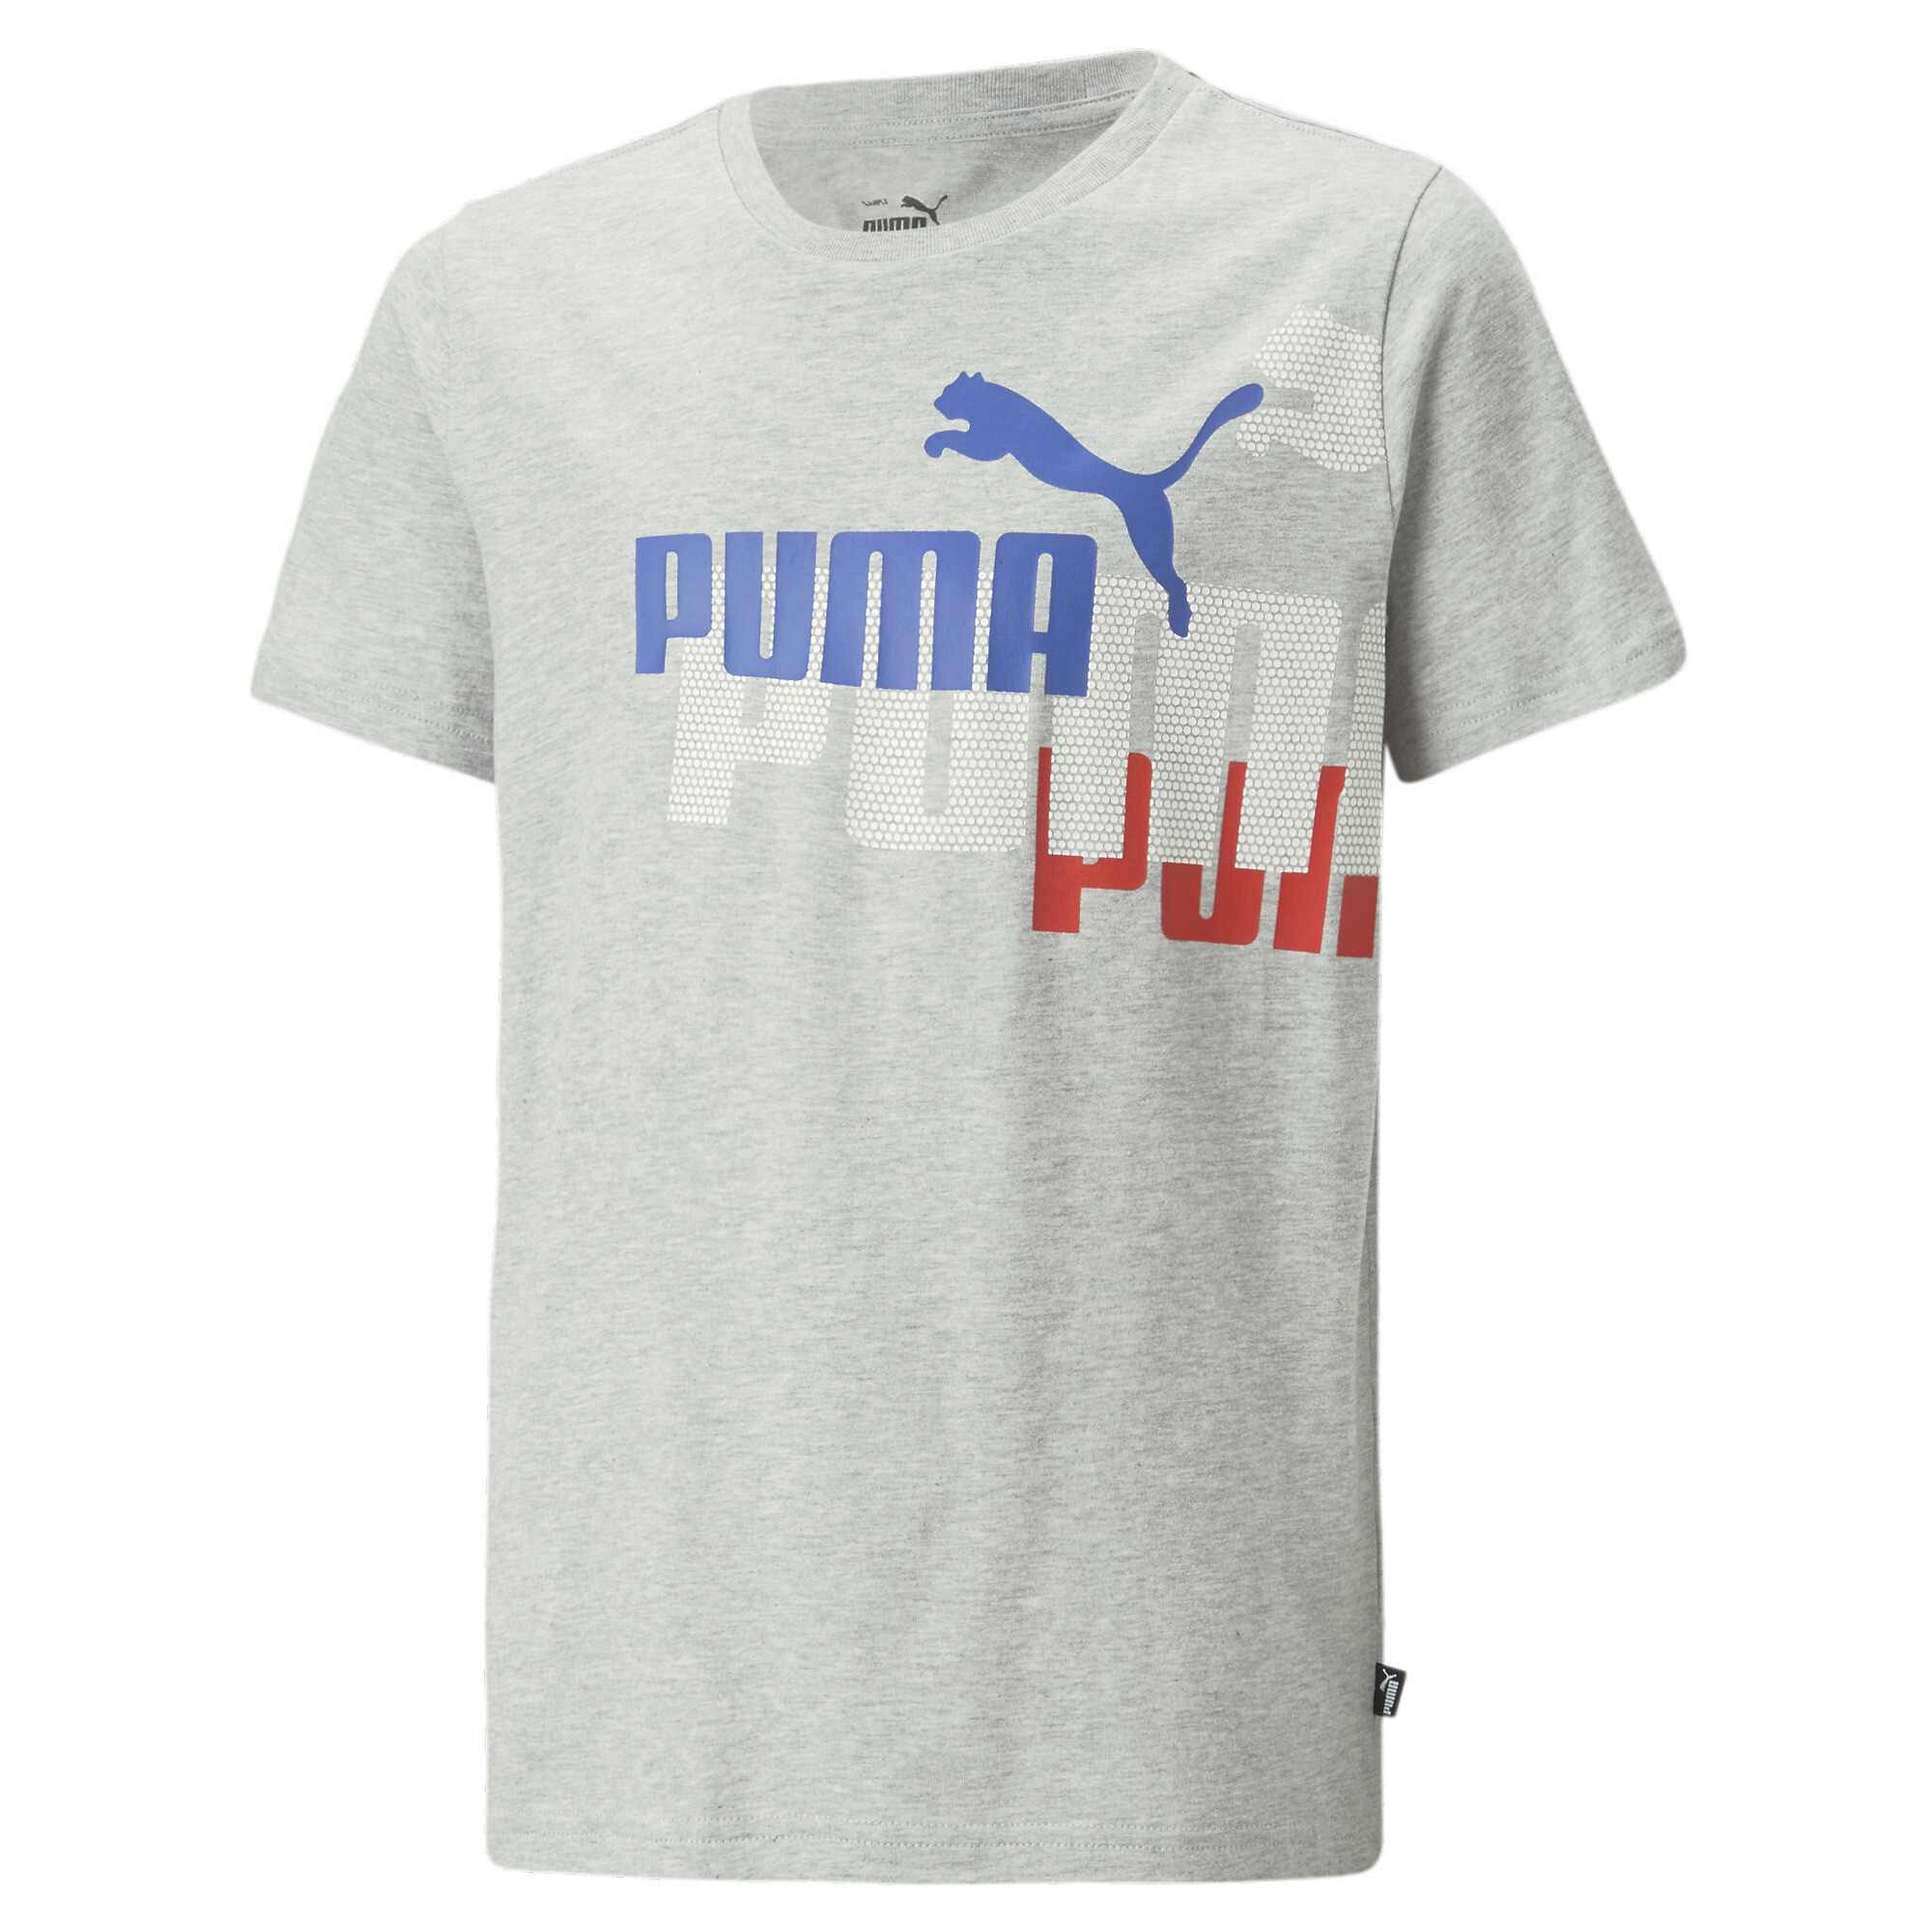 PUMA ESS+ LOGO POWER T-Shirt In Heather, Size 7-8 Youth